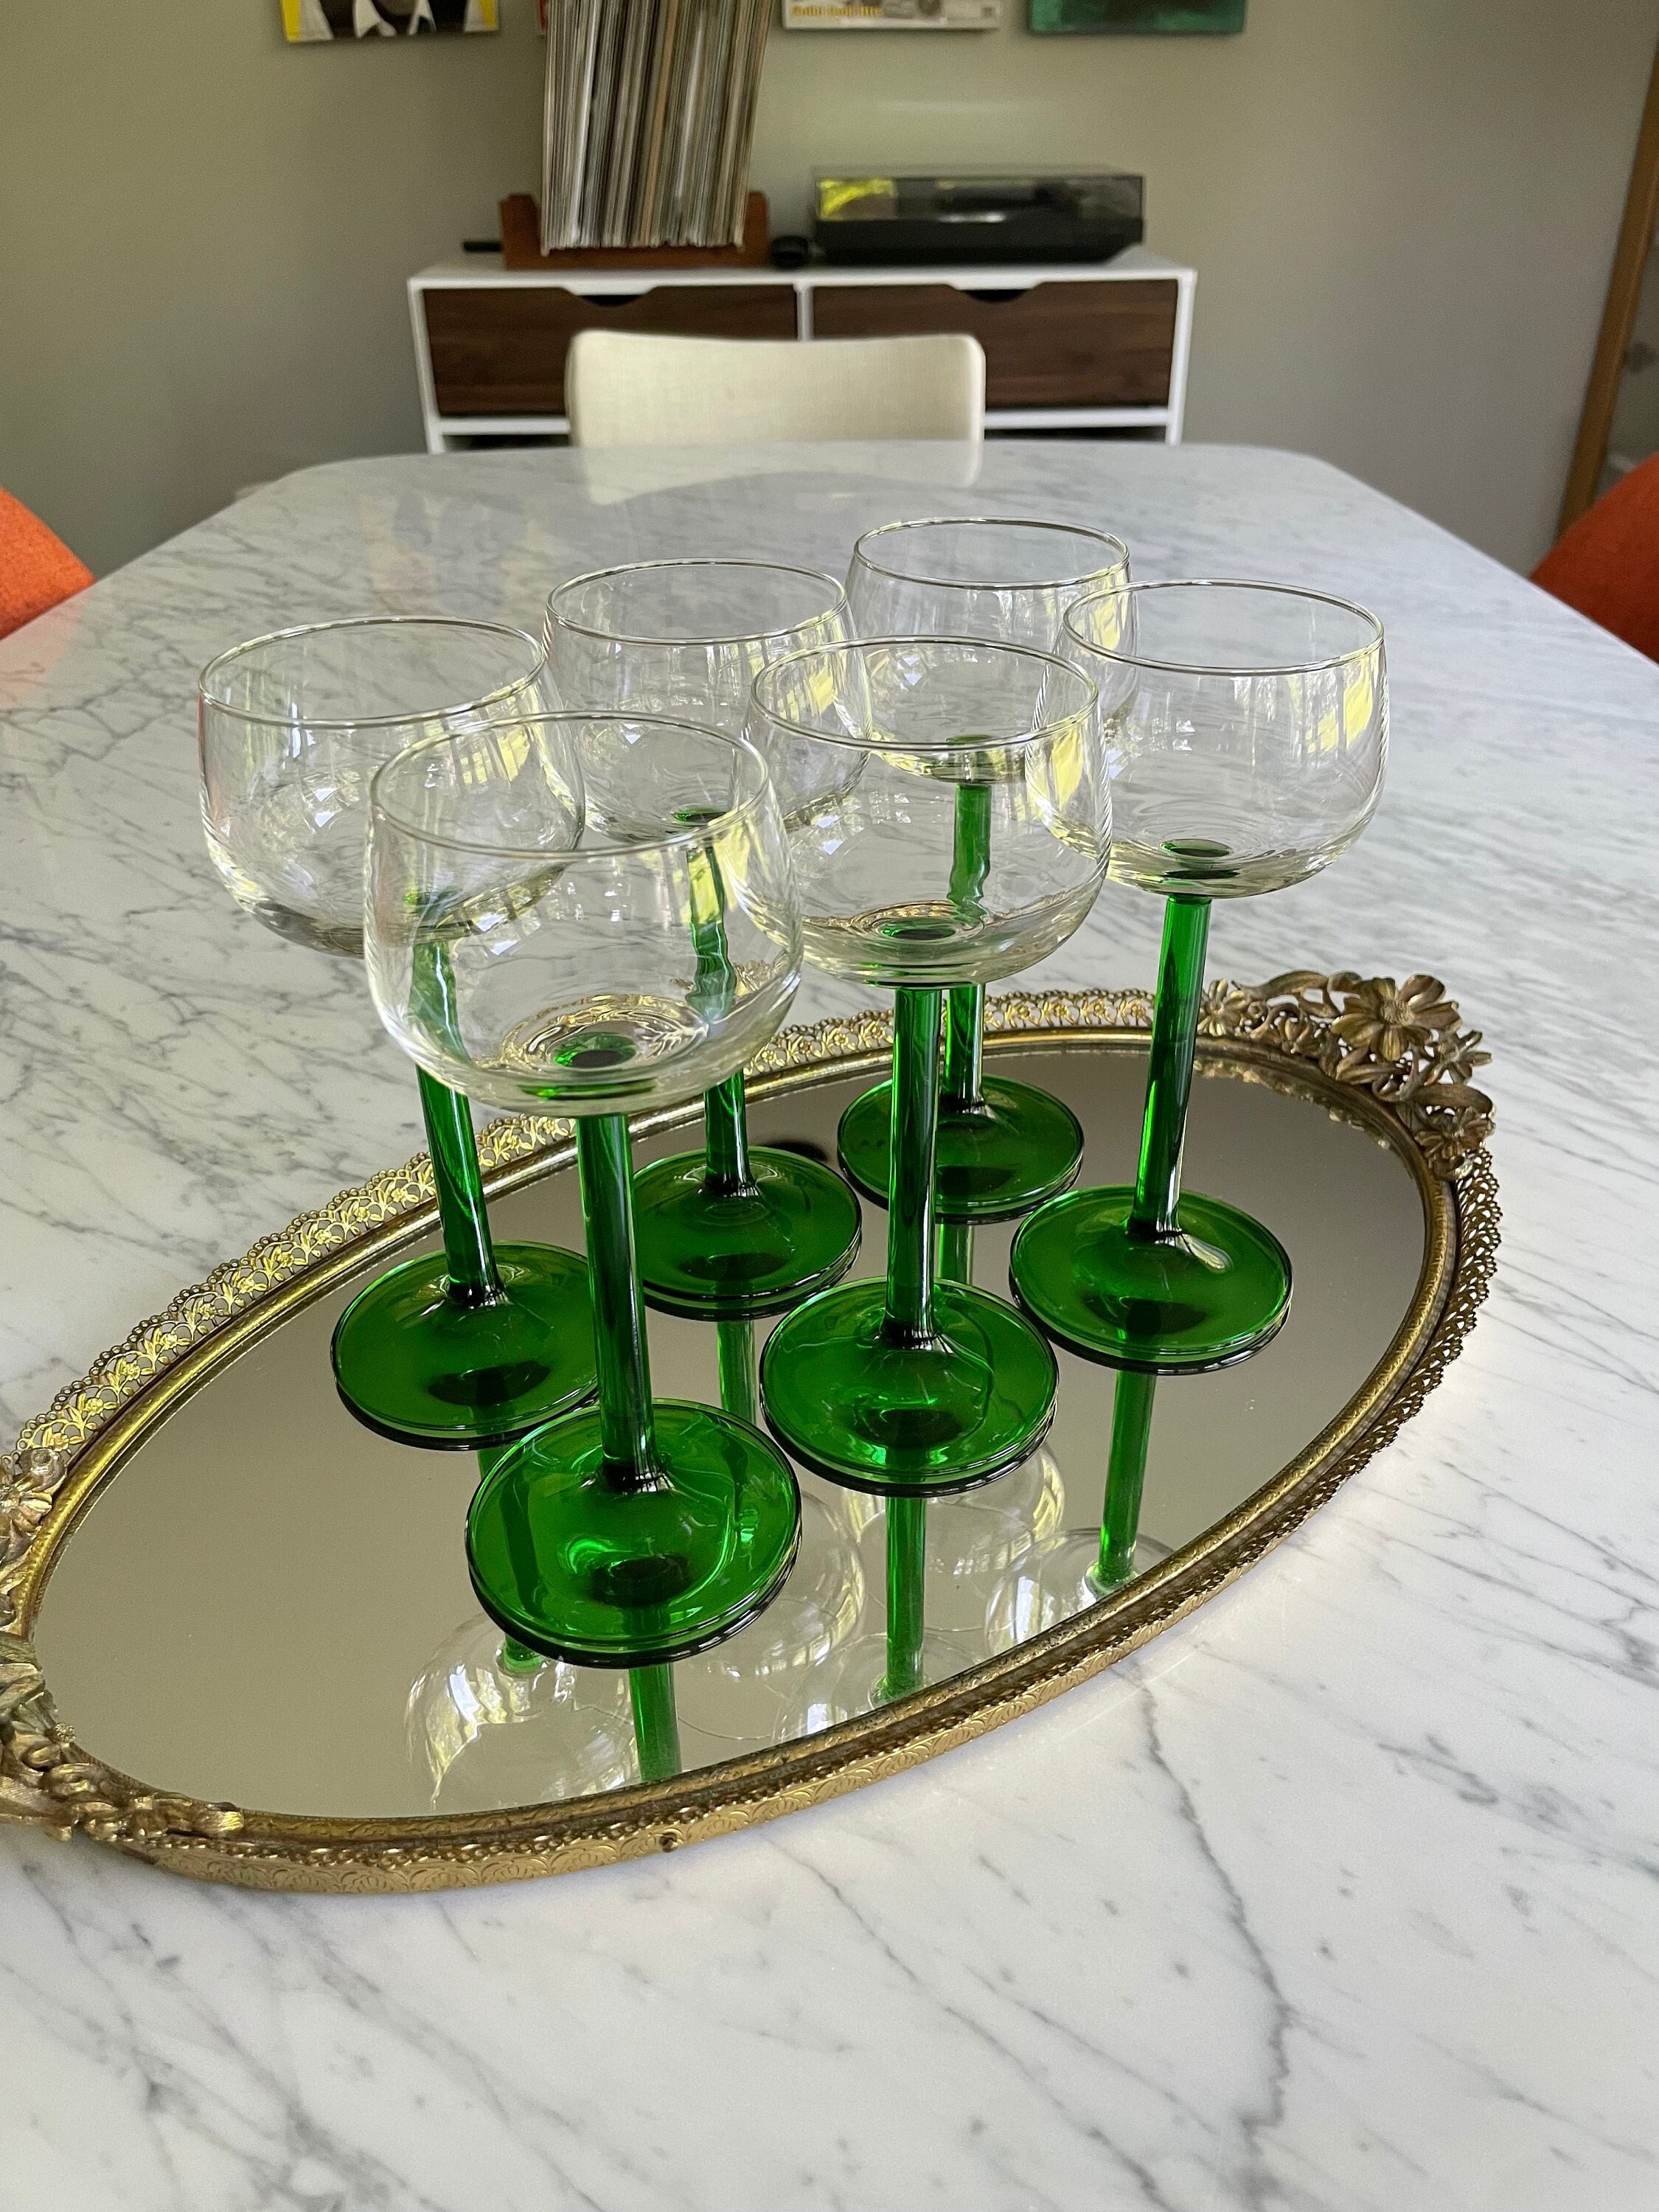 Vintage Green Stem Wine Glasses Luminarc Crystal Glassware retro Stemware  Midcentury French Barware 60s